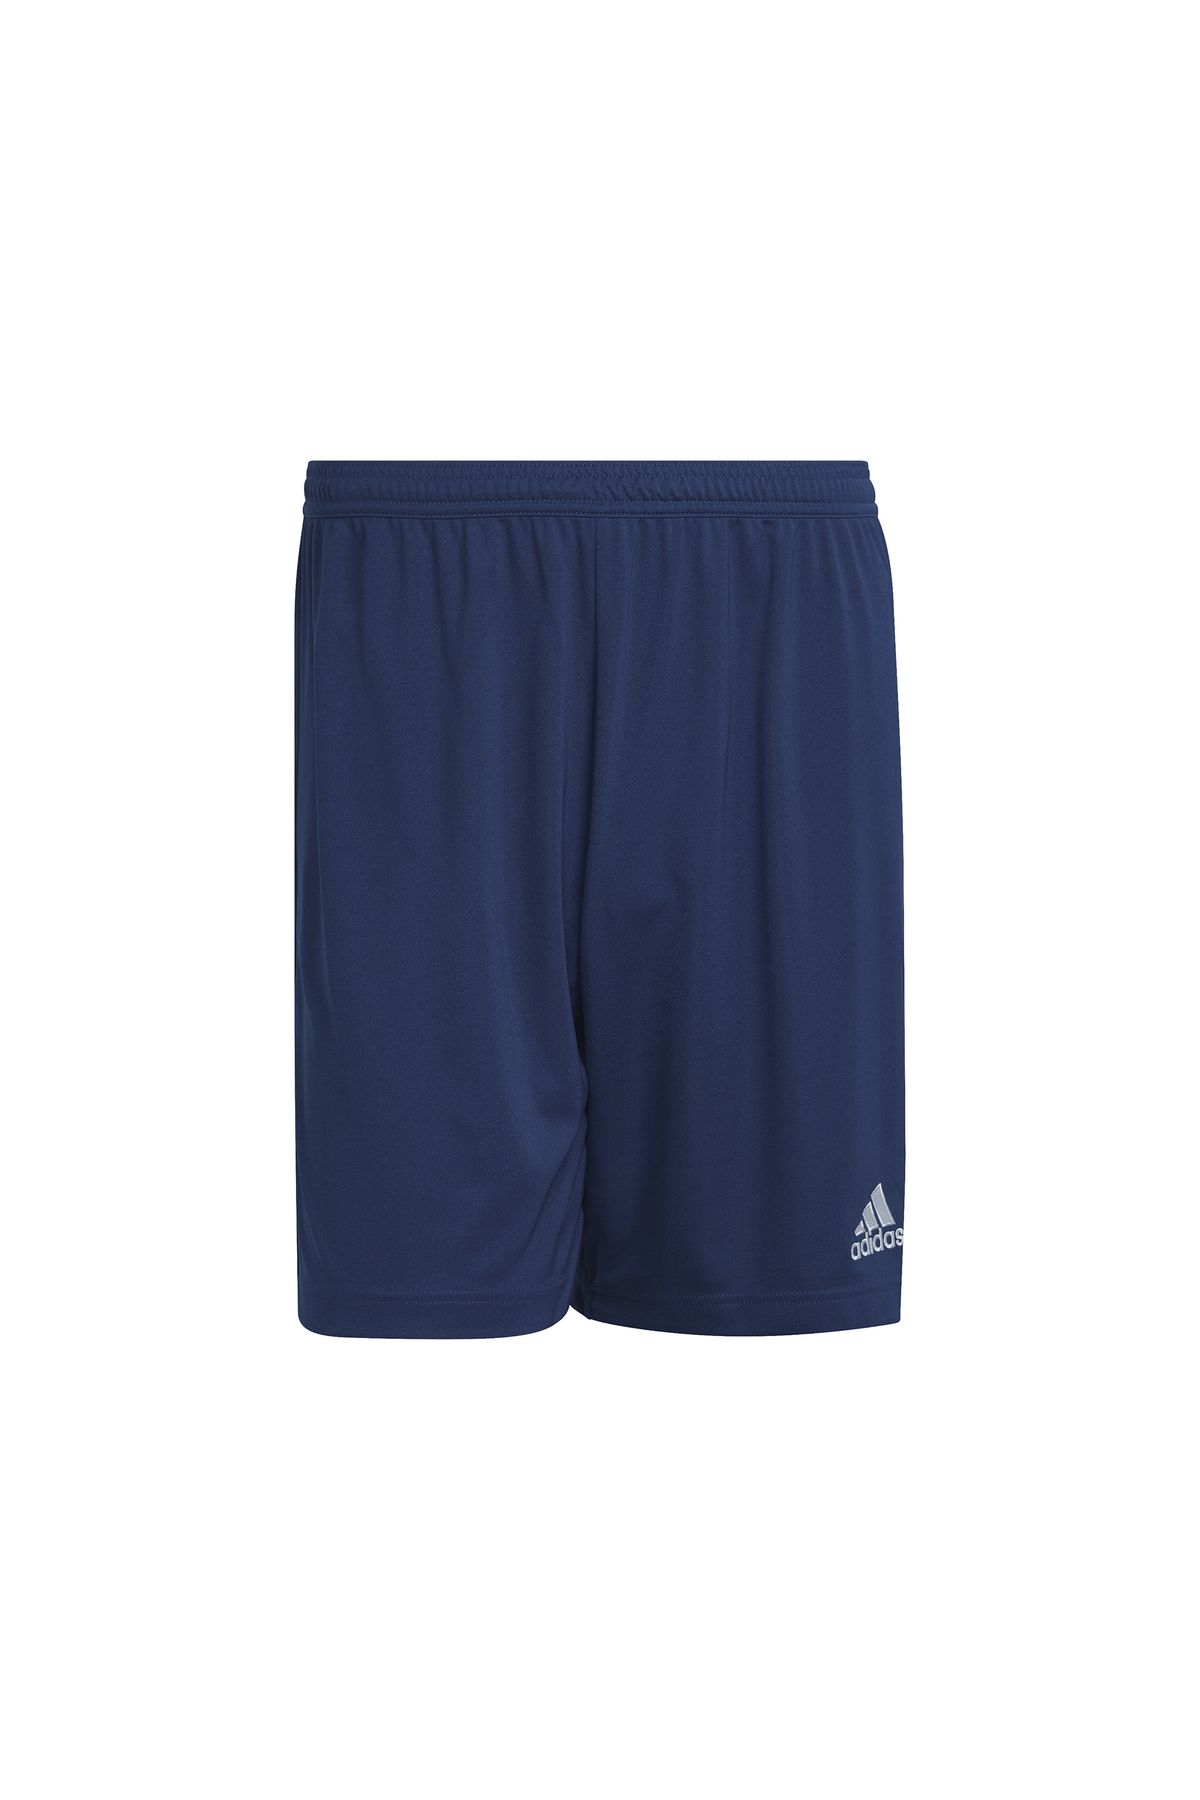 adidas Ent22 Sho Men\'s Navy Trendyol - Blue Shorts H57506